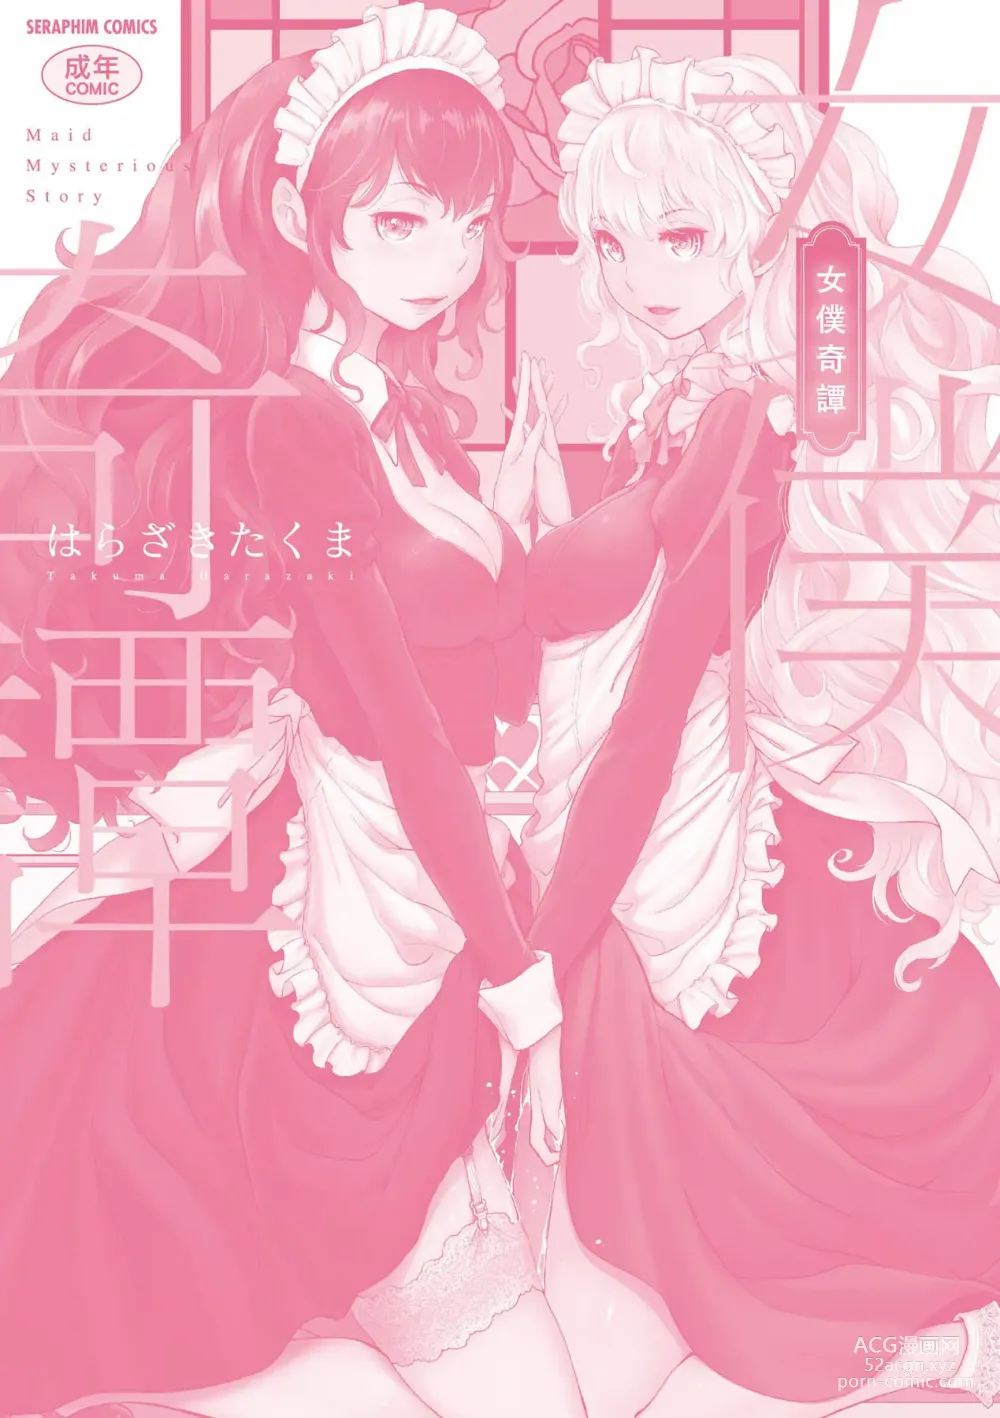 Page 214 of manga Maid Kitan - Maid Misteryous Story (decensored)